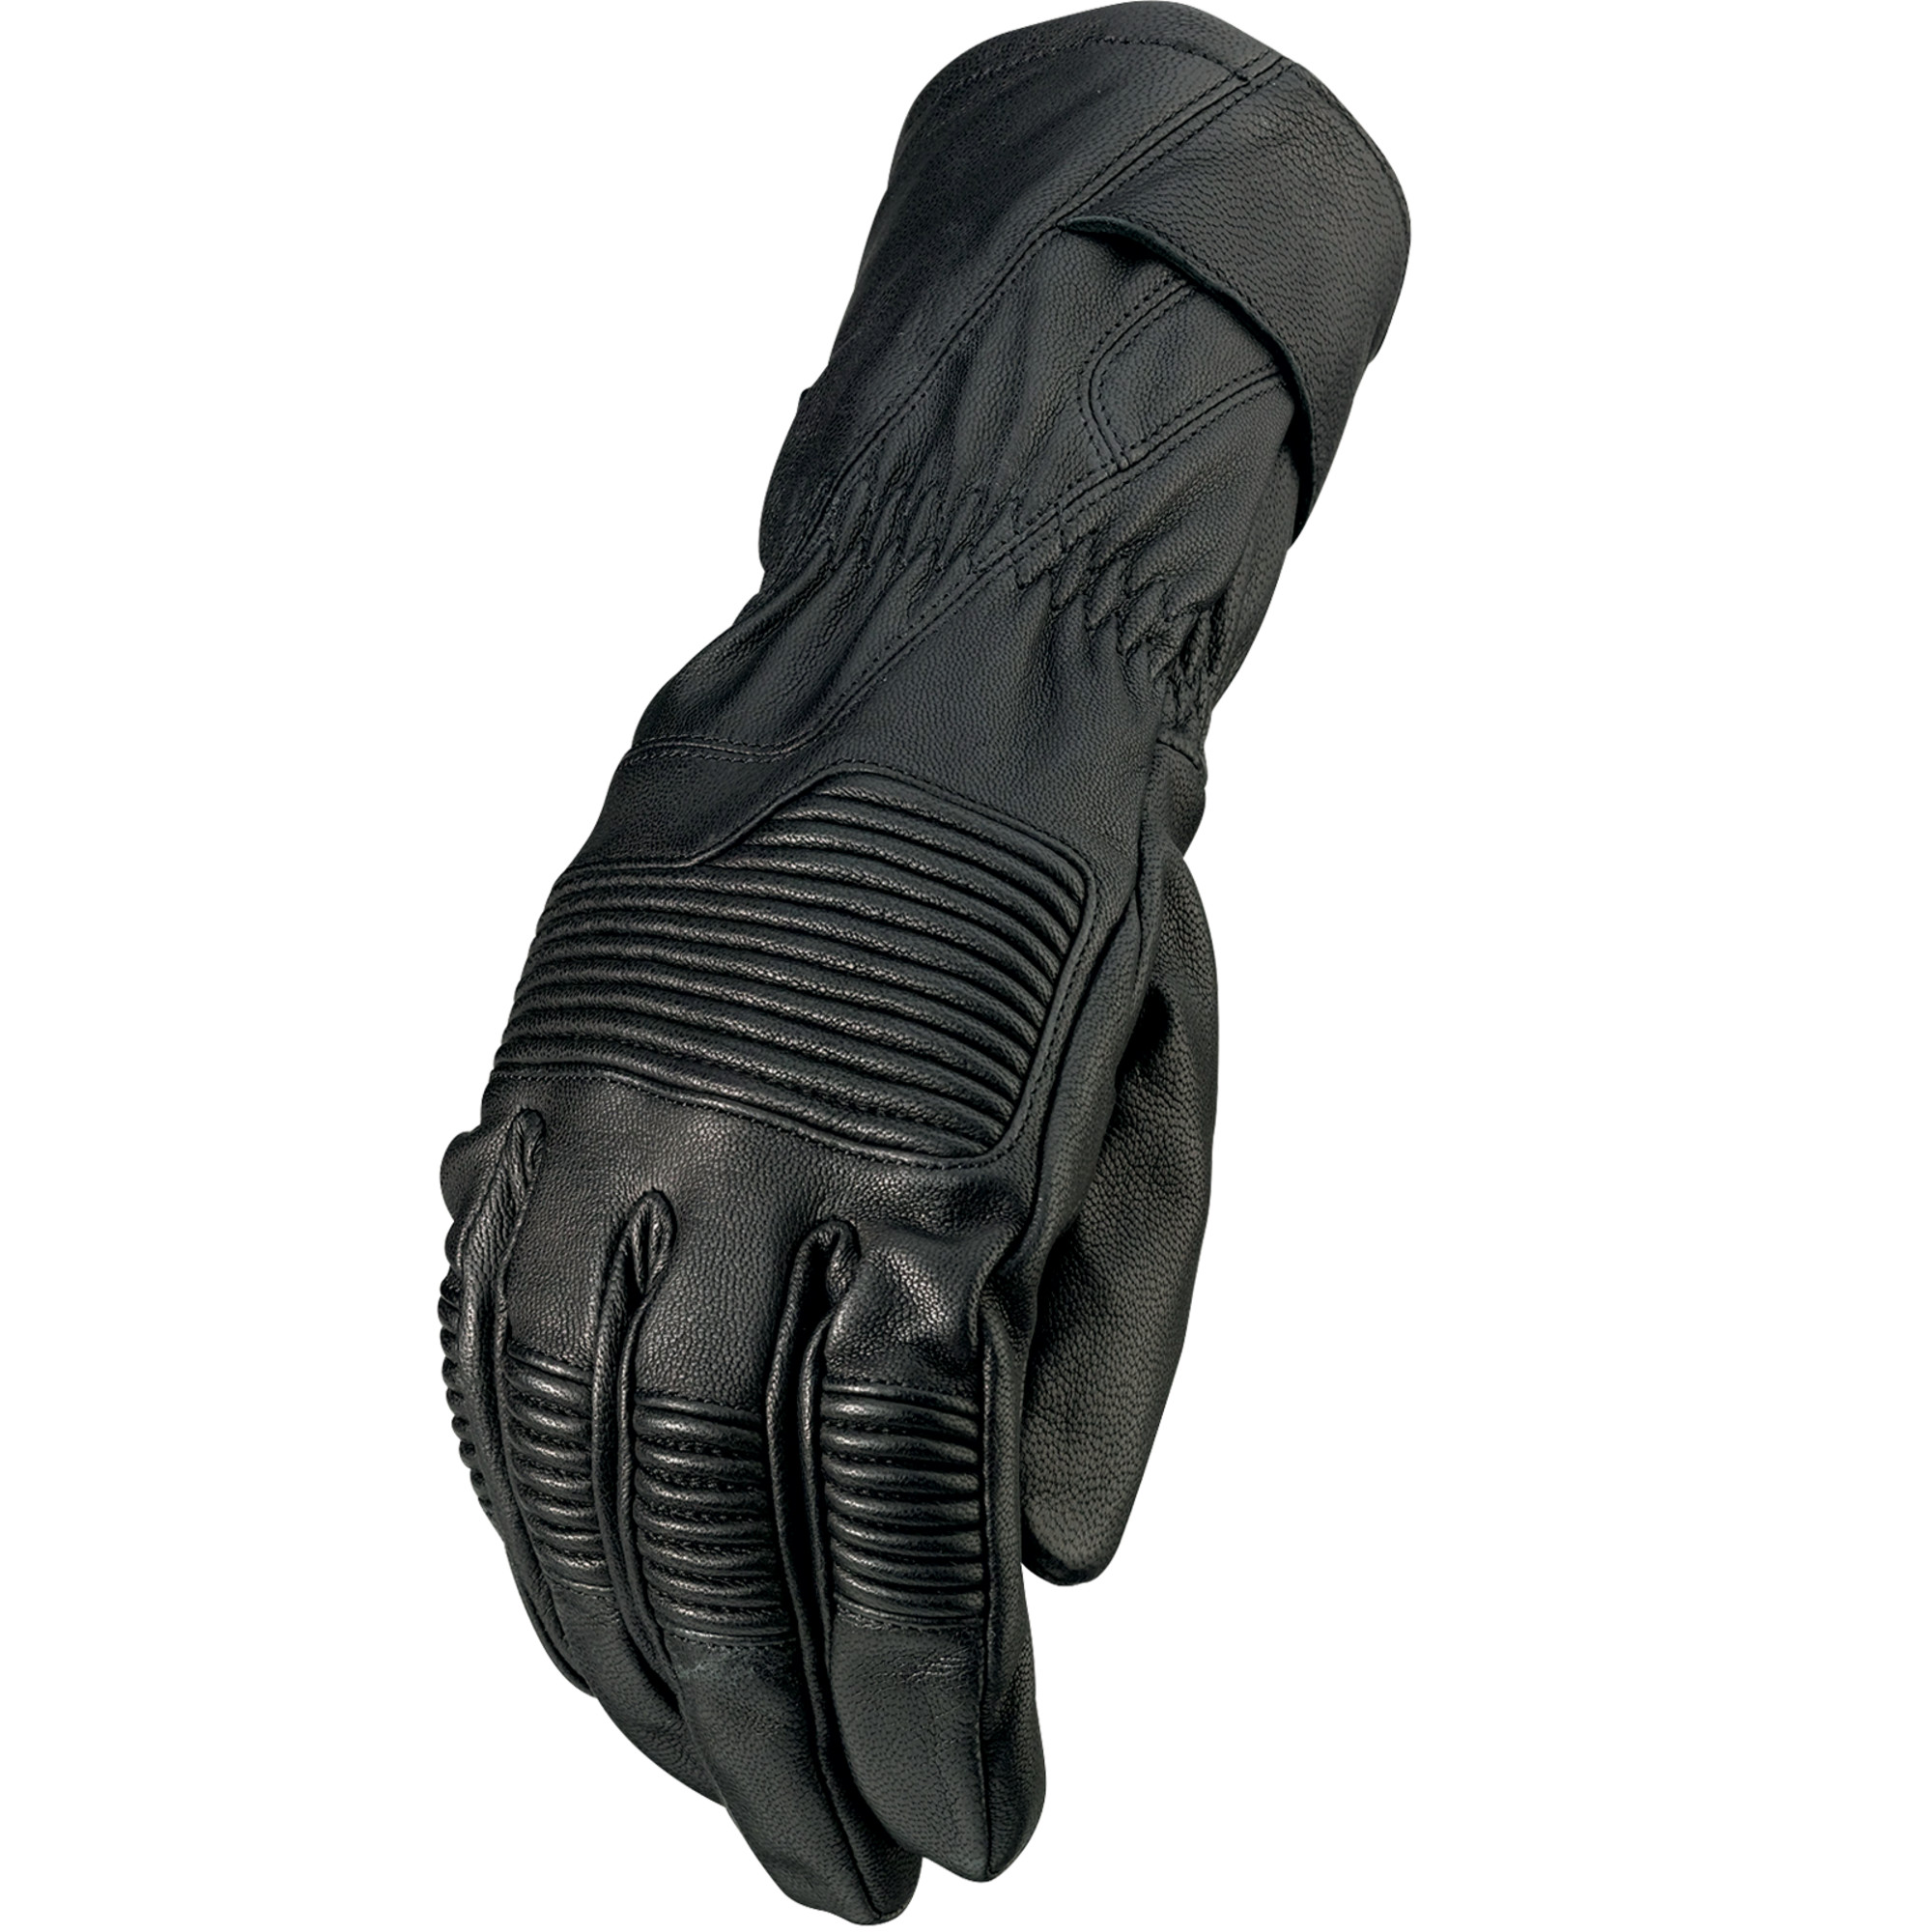 z1r leather gloves for men recoil